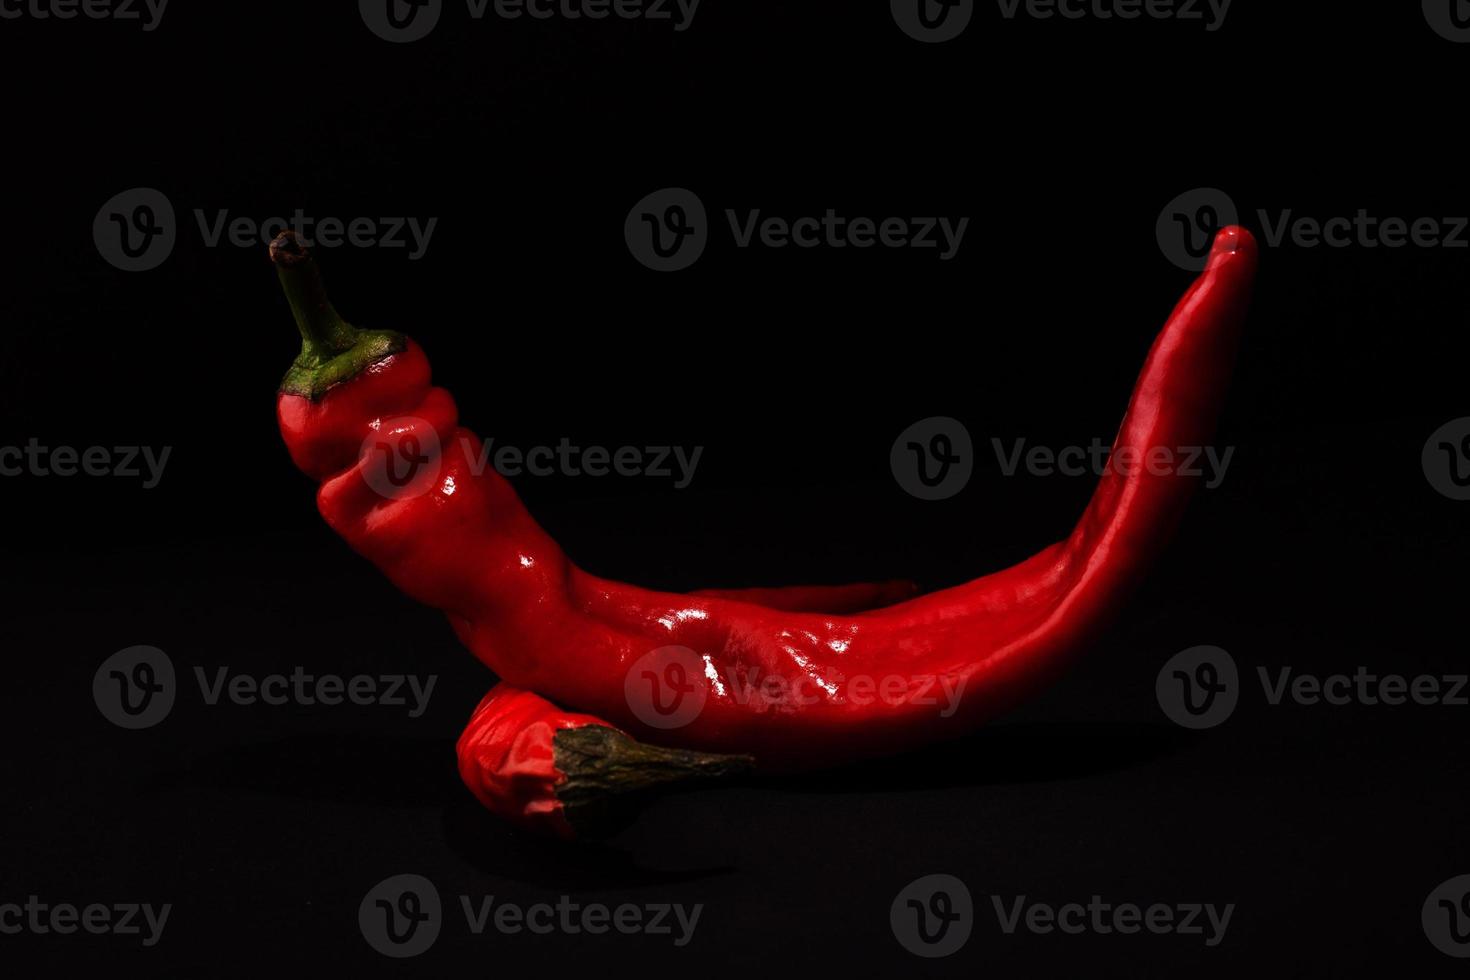 röd het chilipeppar på en svart bakgrund foto